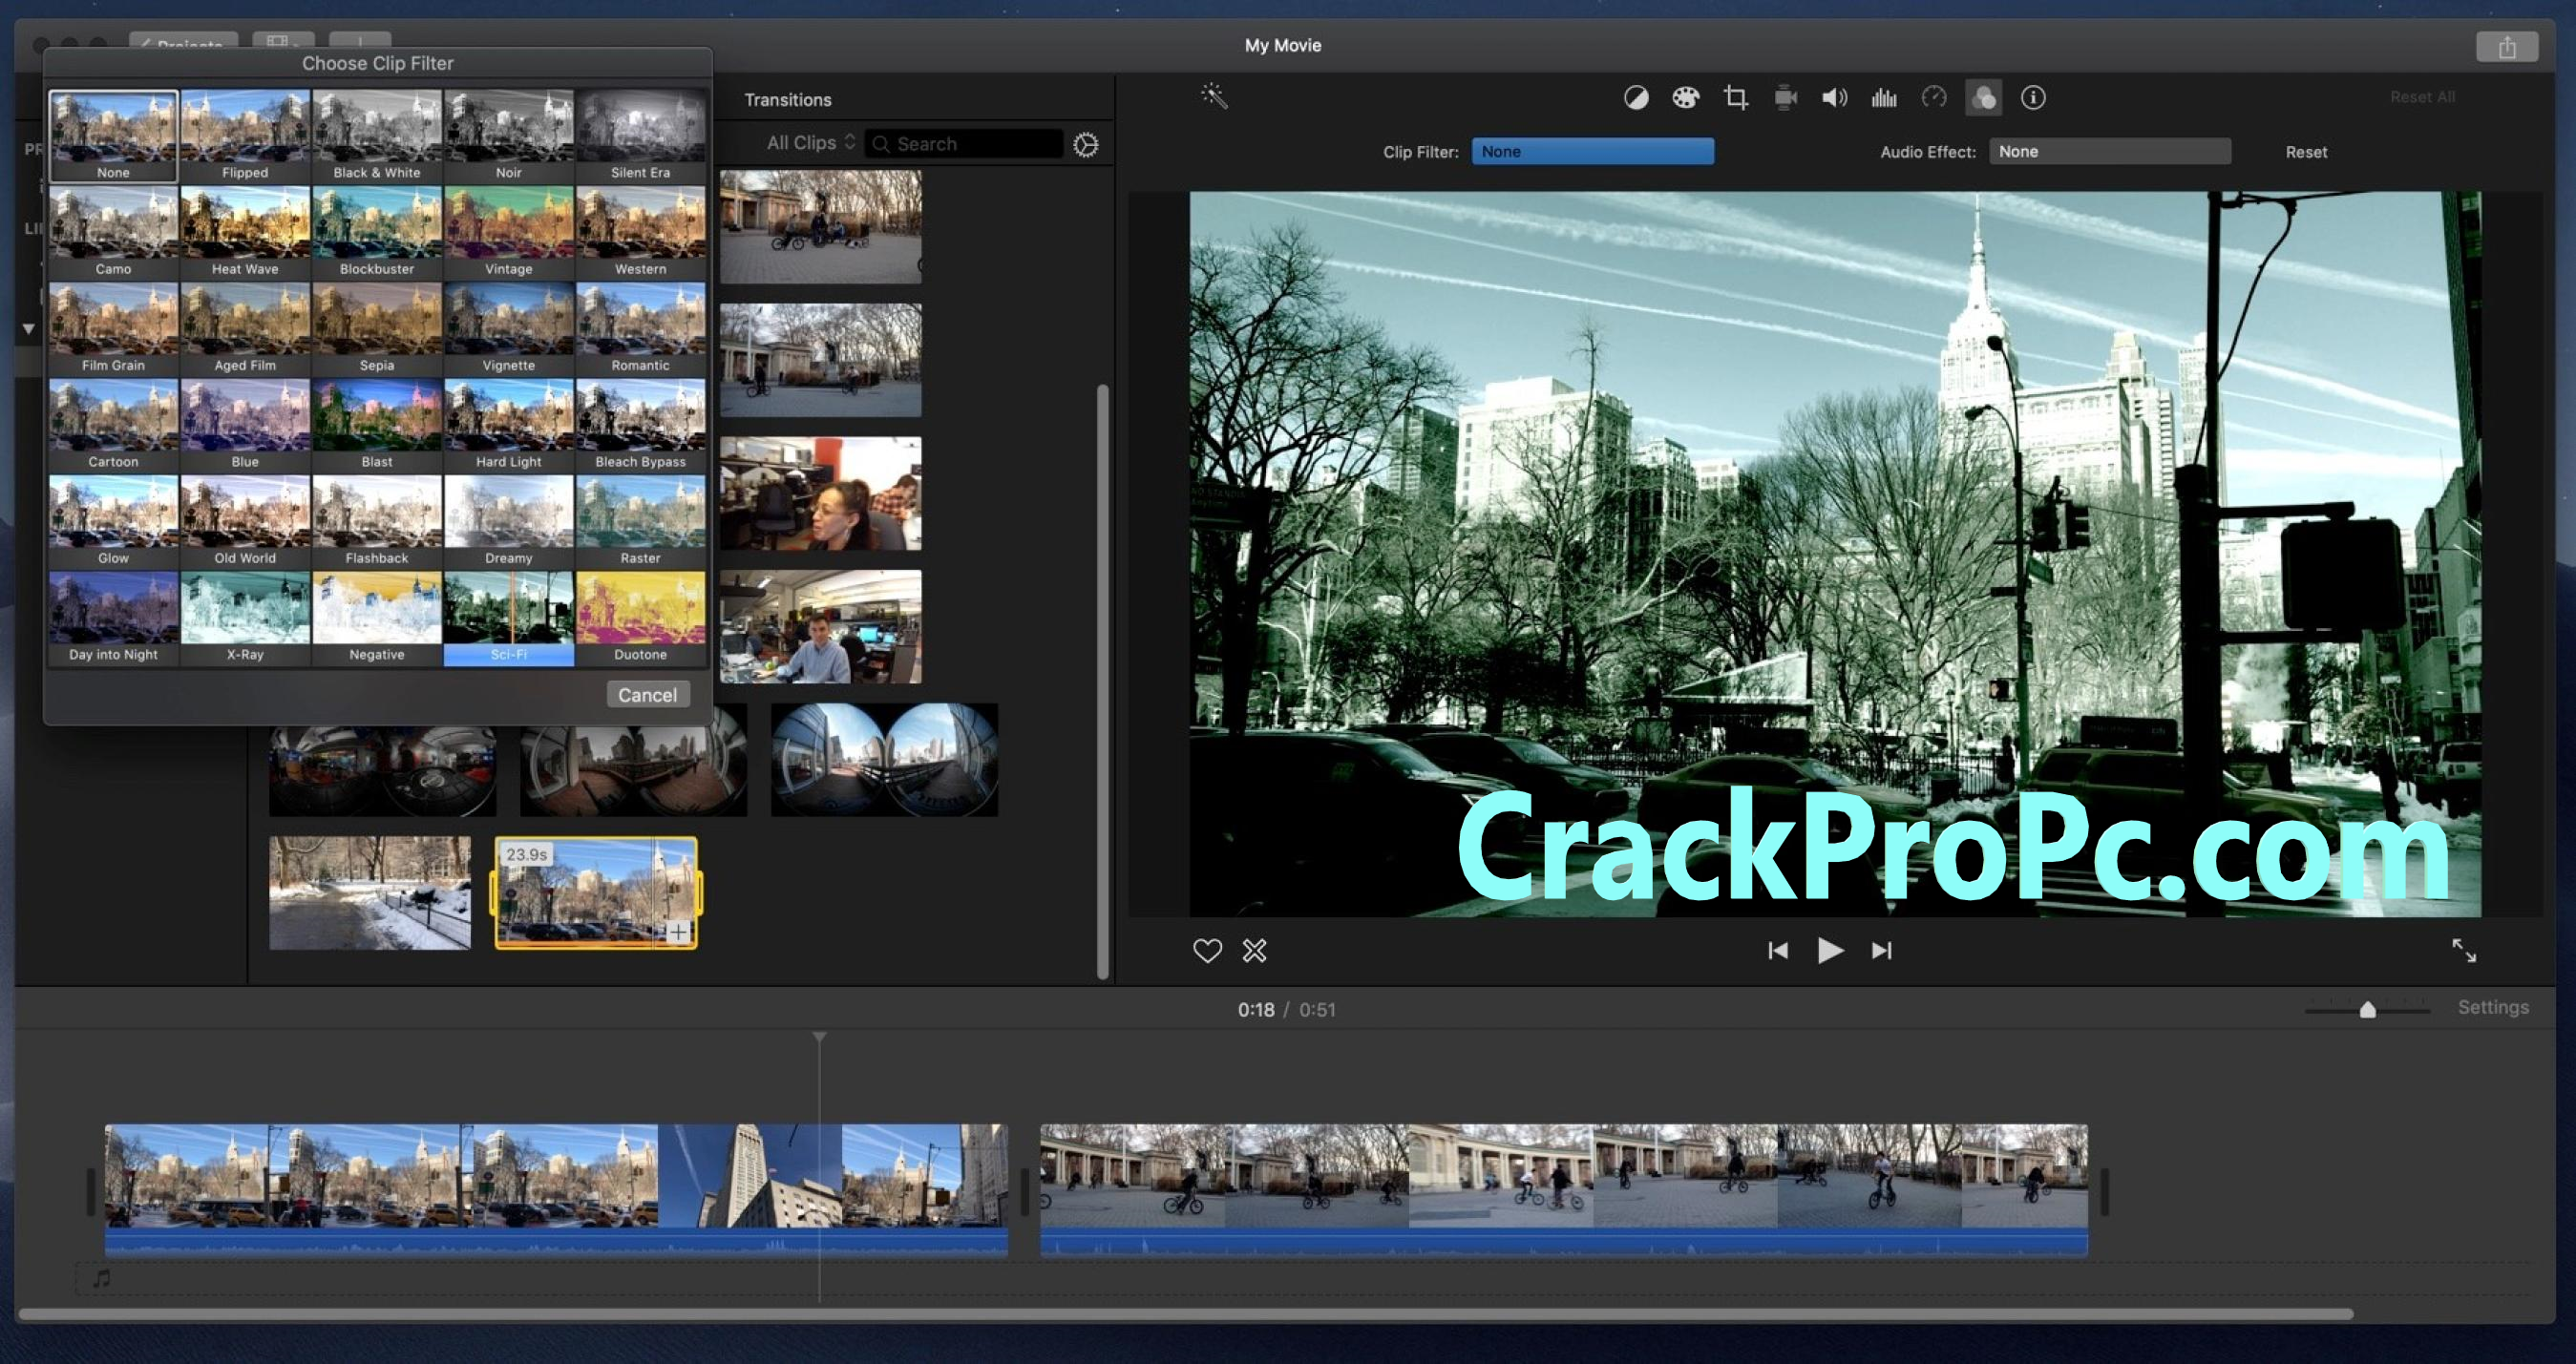 iMovie 10.3.1 Crack Win + Mac Full Latest Version Free Download 2022